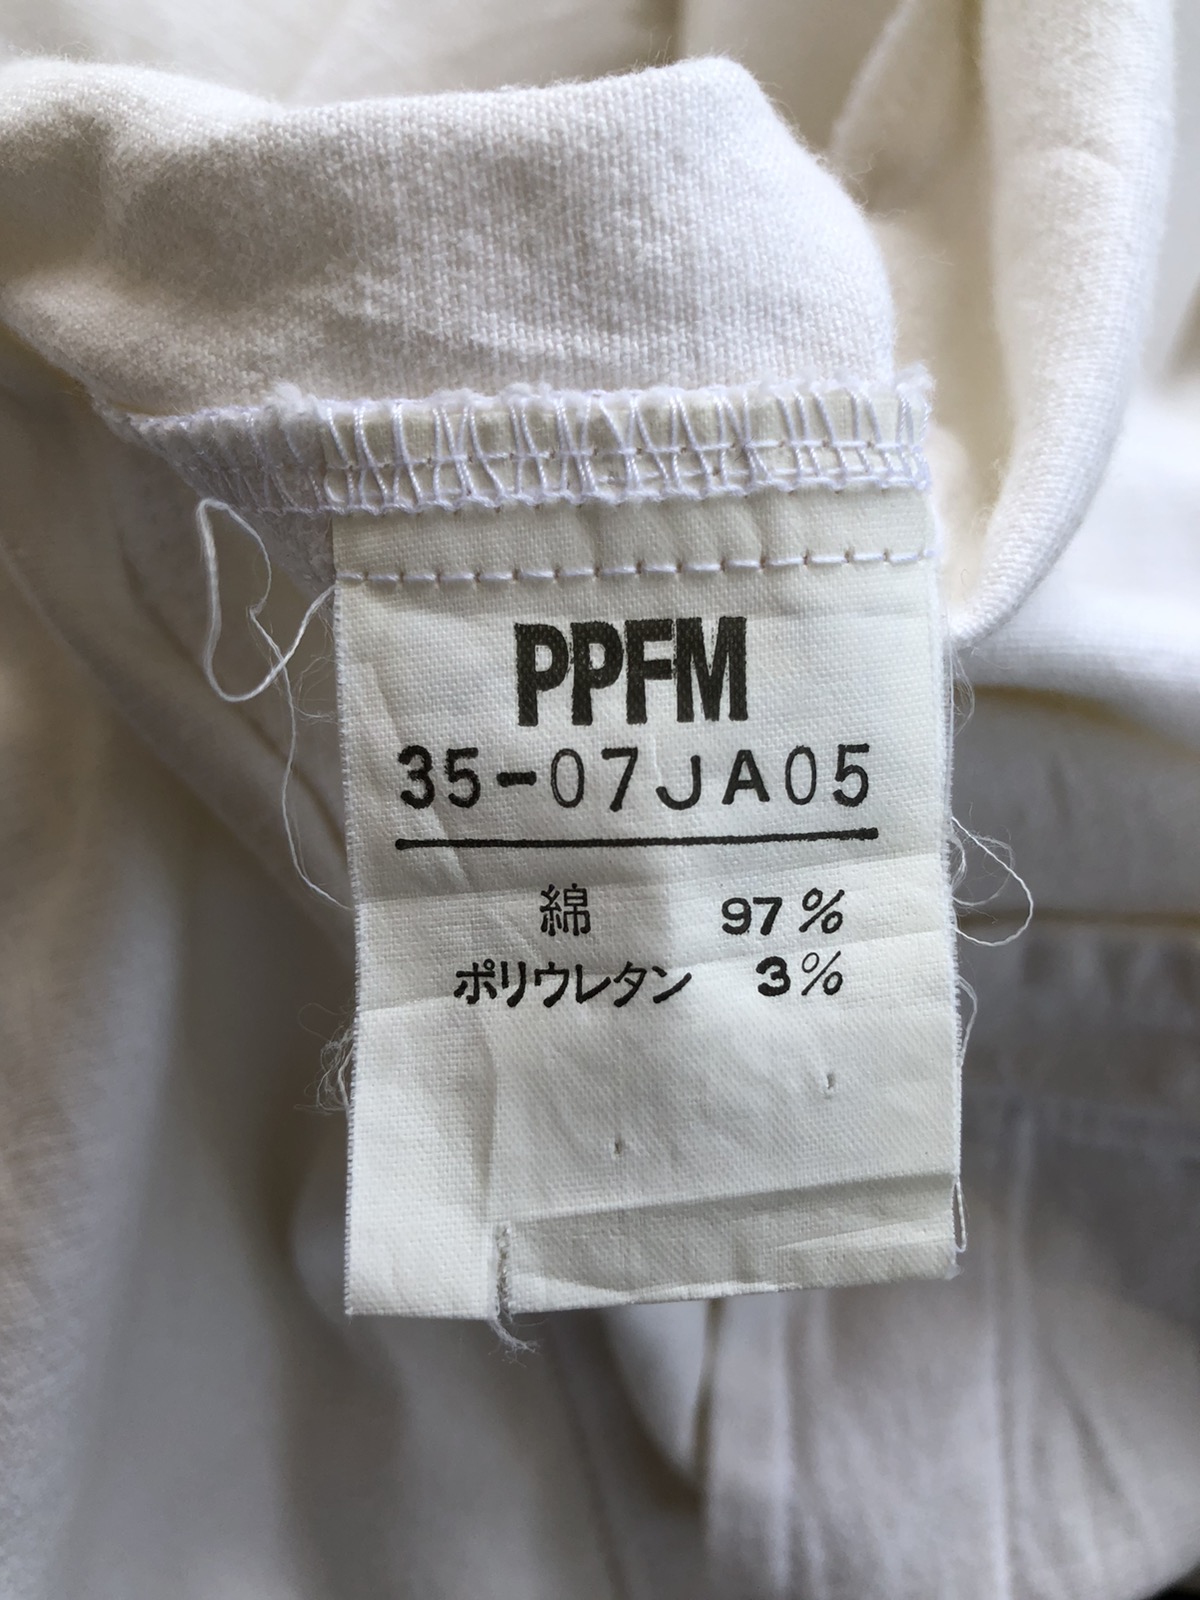 Japanese Brand - Japanese Brand PPFM zipper 3Q - 7